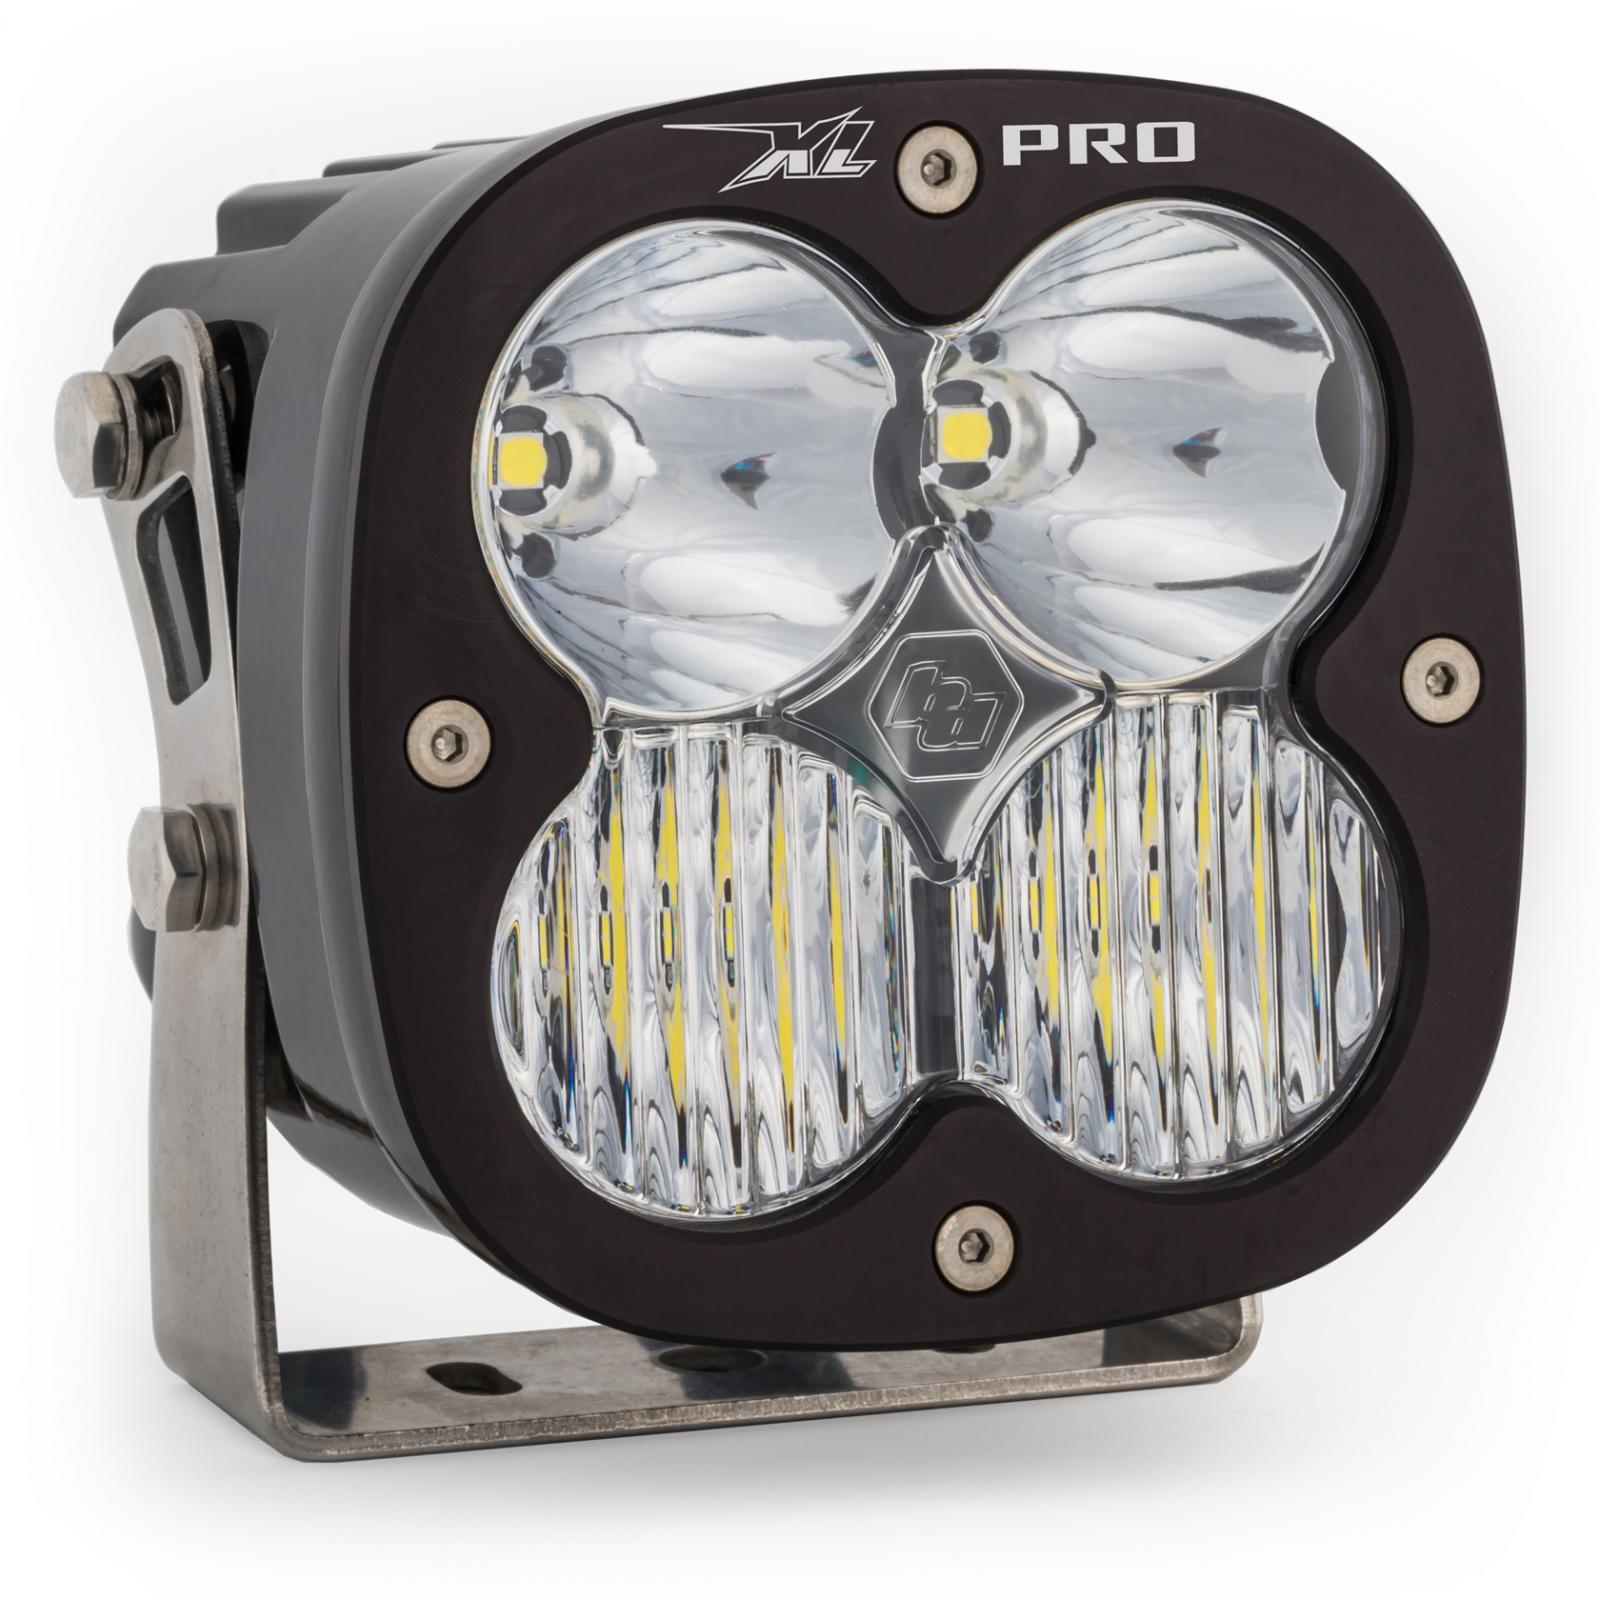 Baja Designs LED Light Pods Clear Lens Spot Each XL Pro Driving/Combo